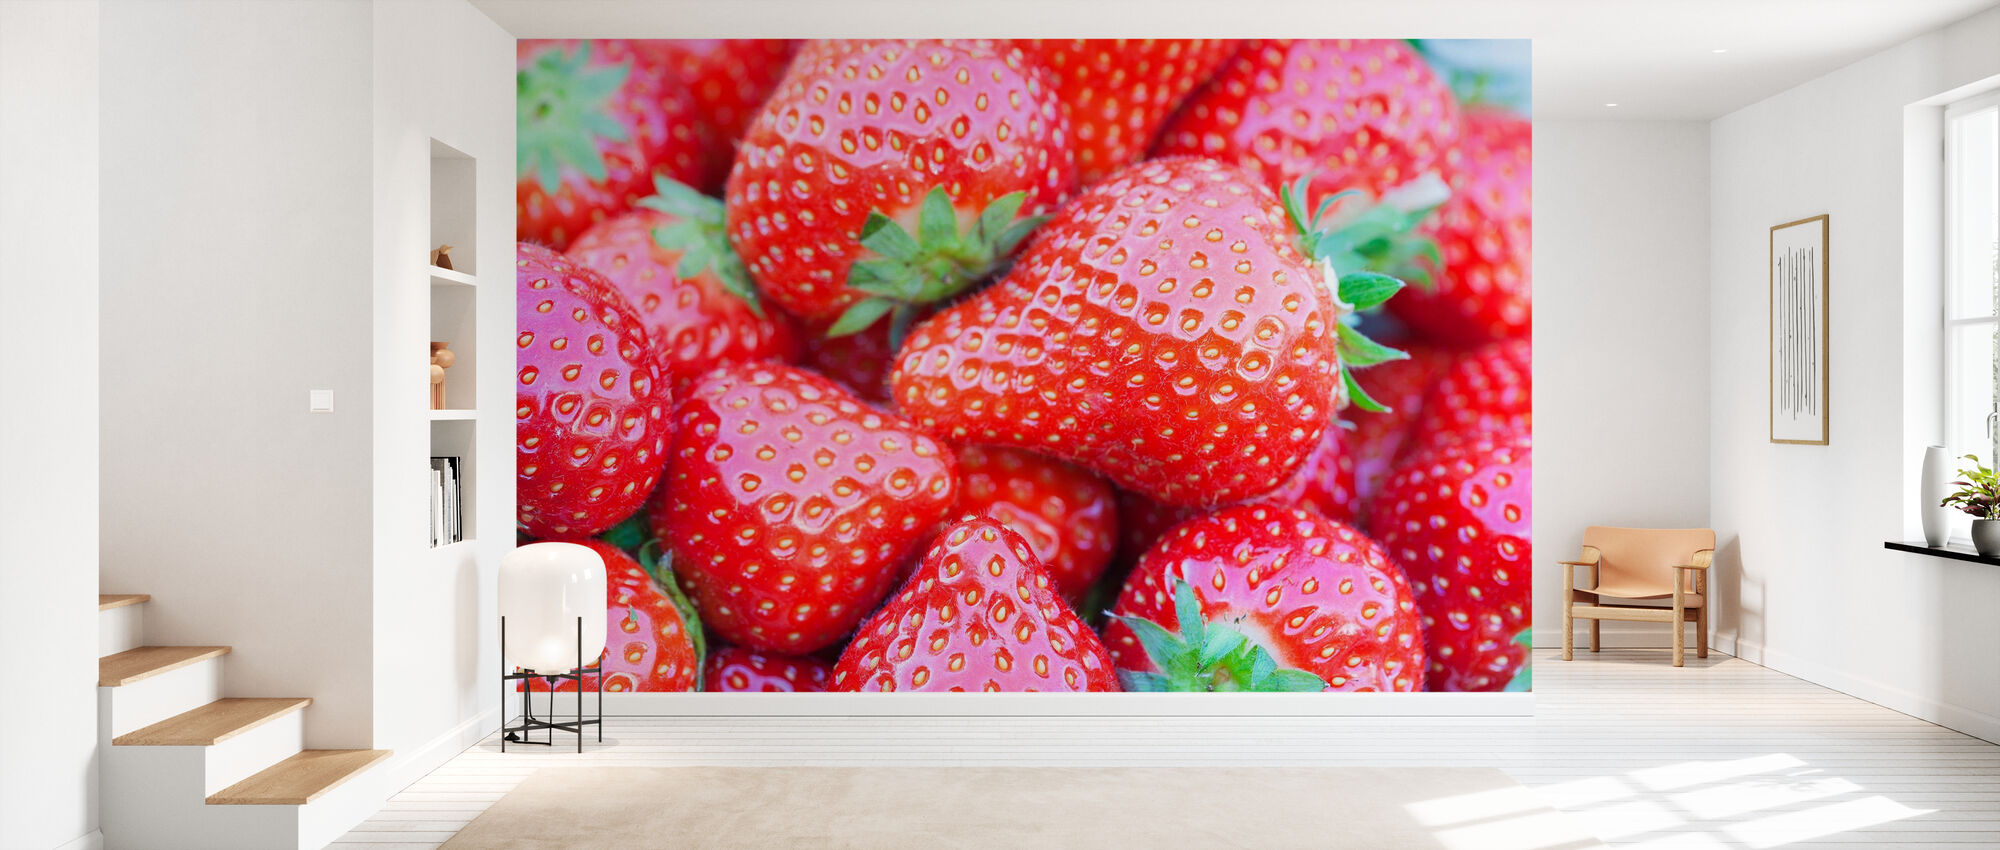 Strawberry – wall murals online – Photowall